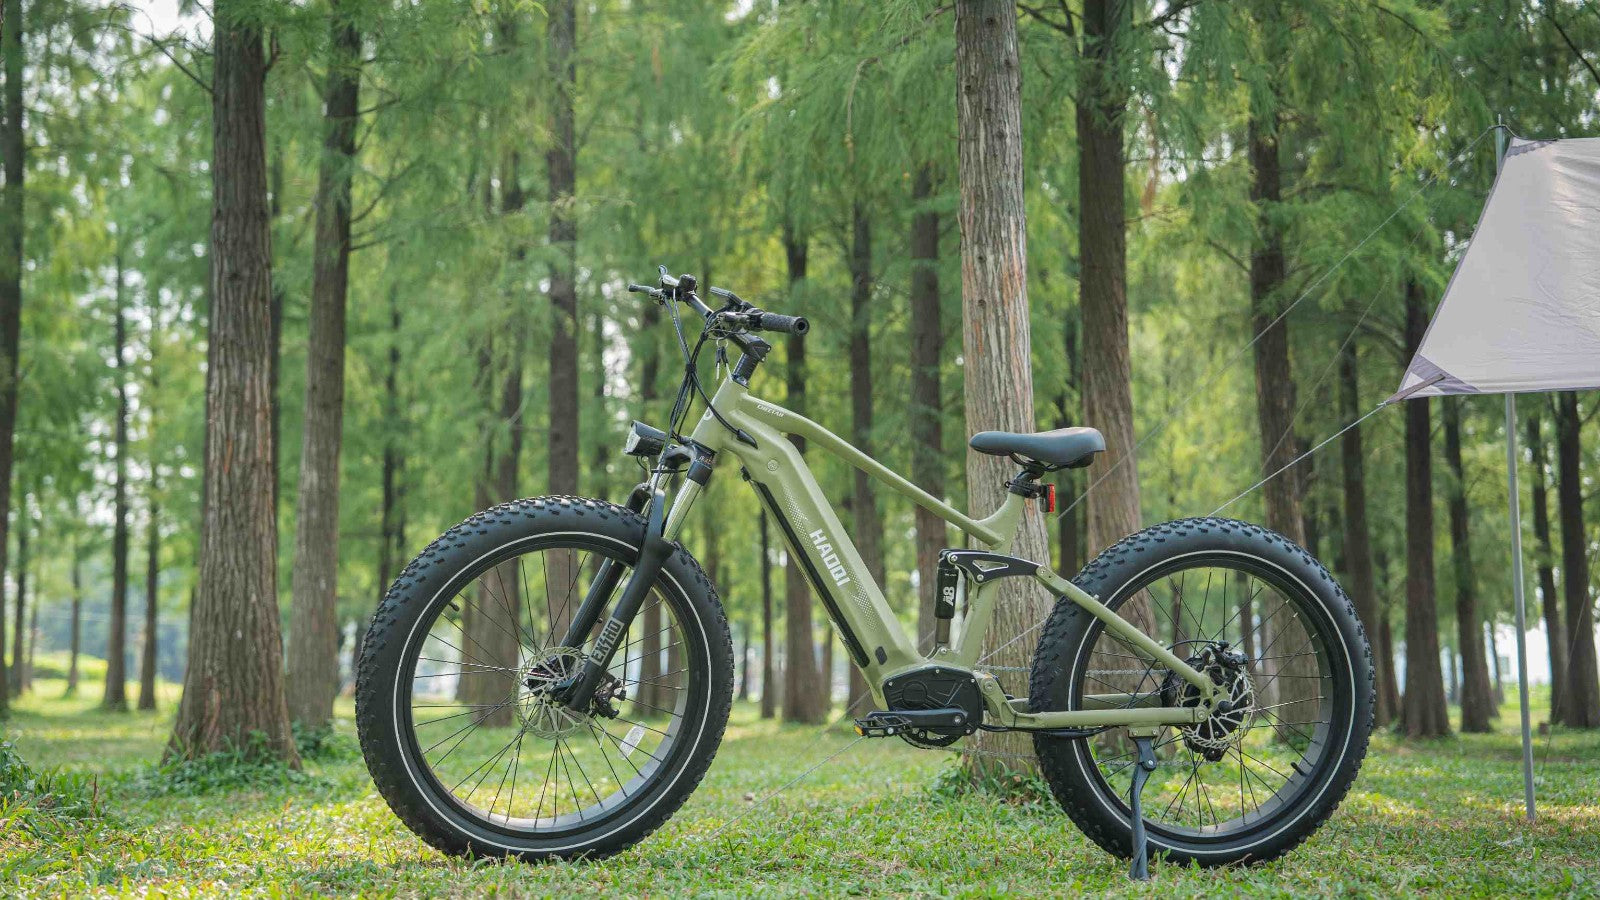 HAOQI soft tail electric bike